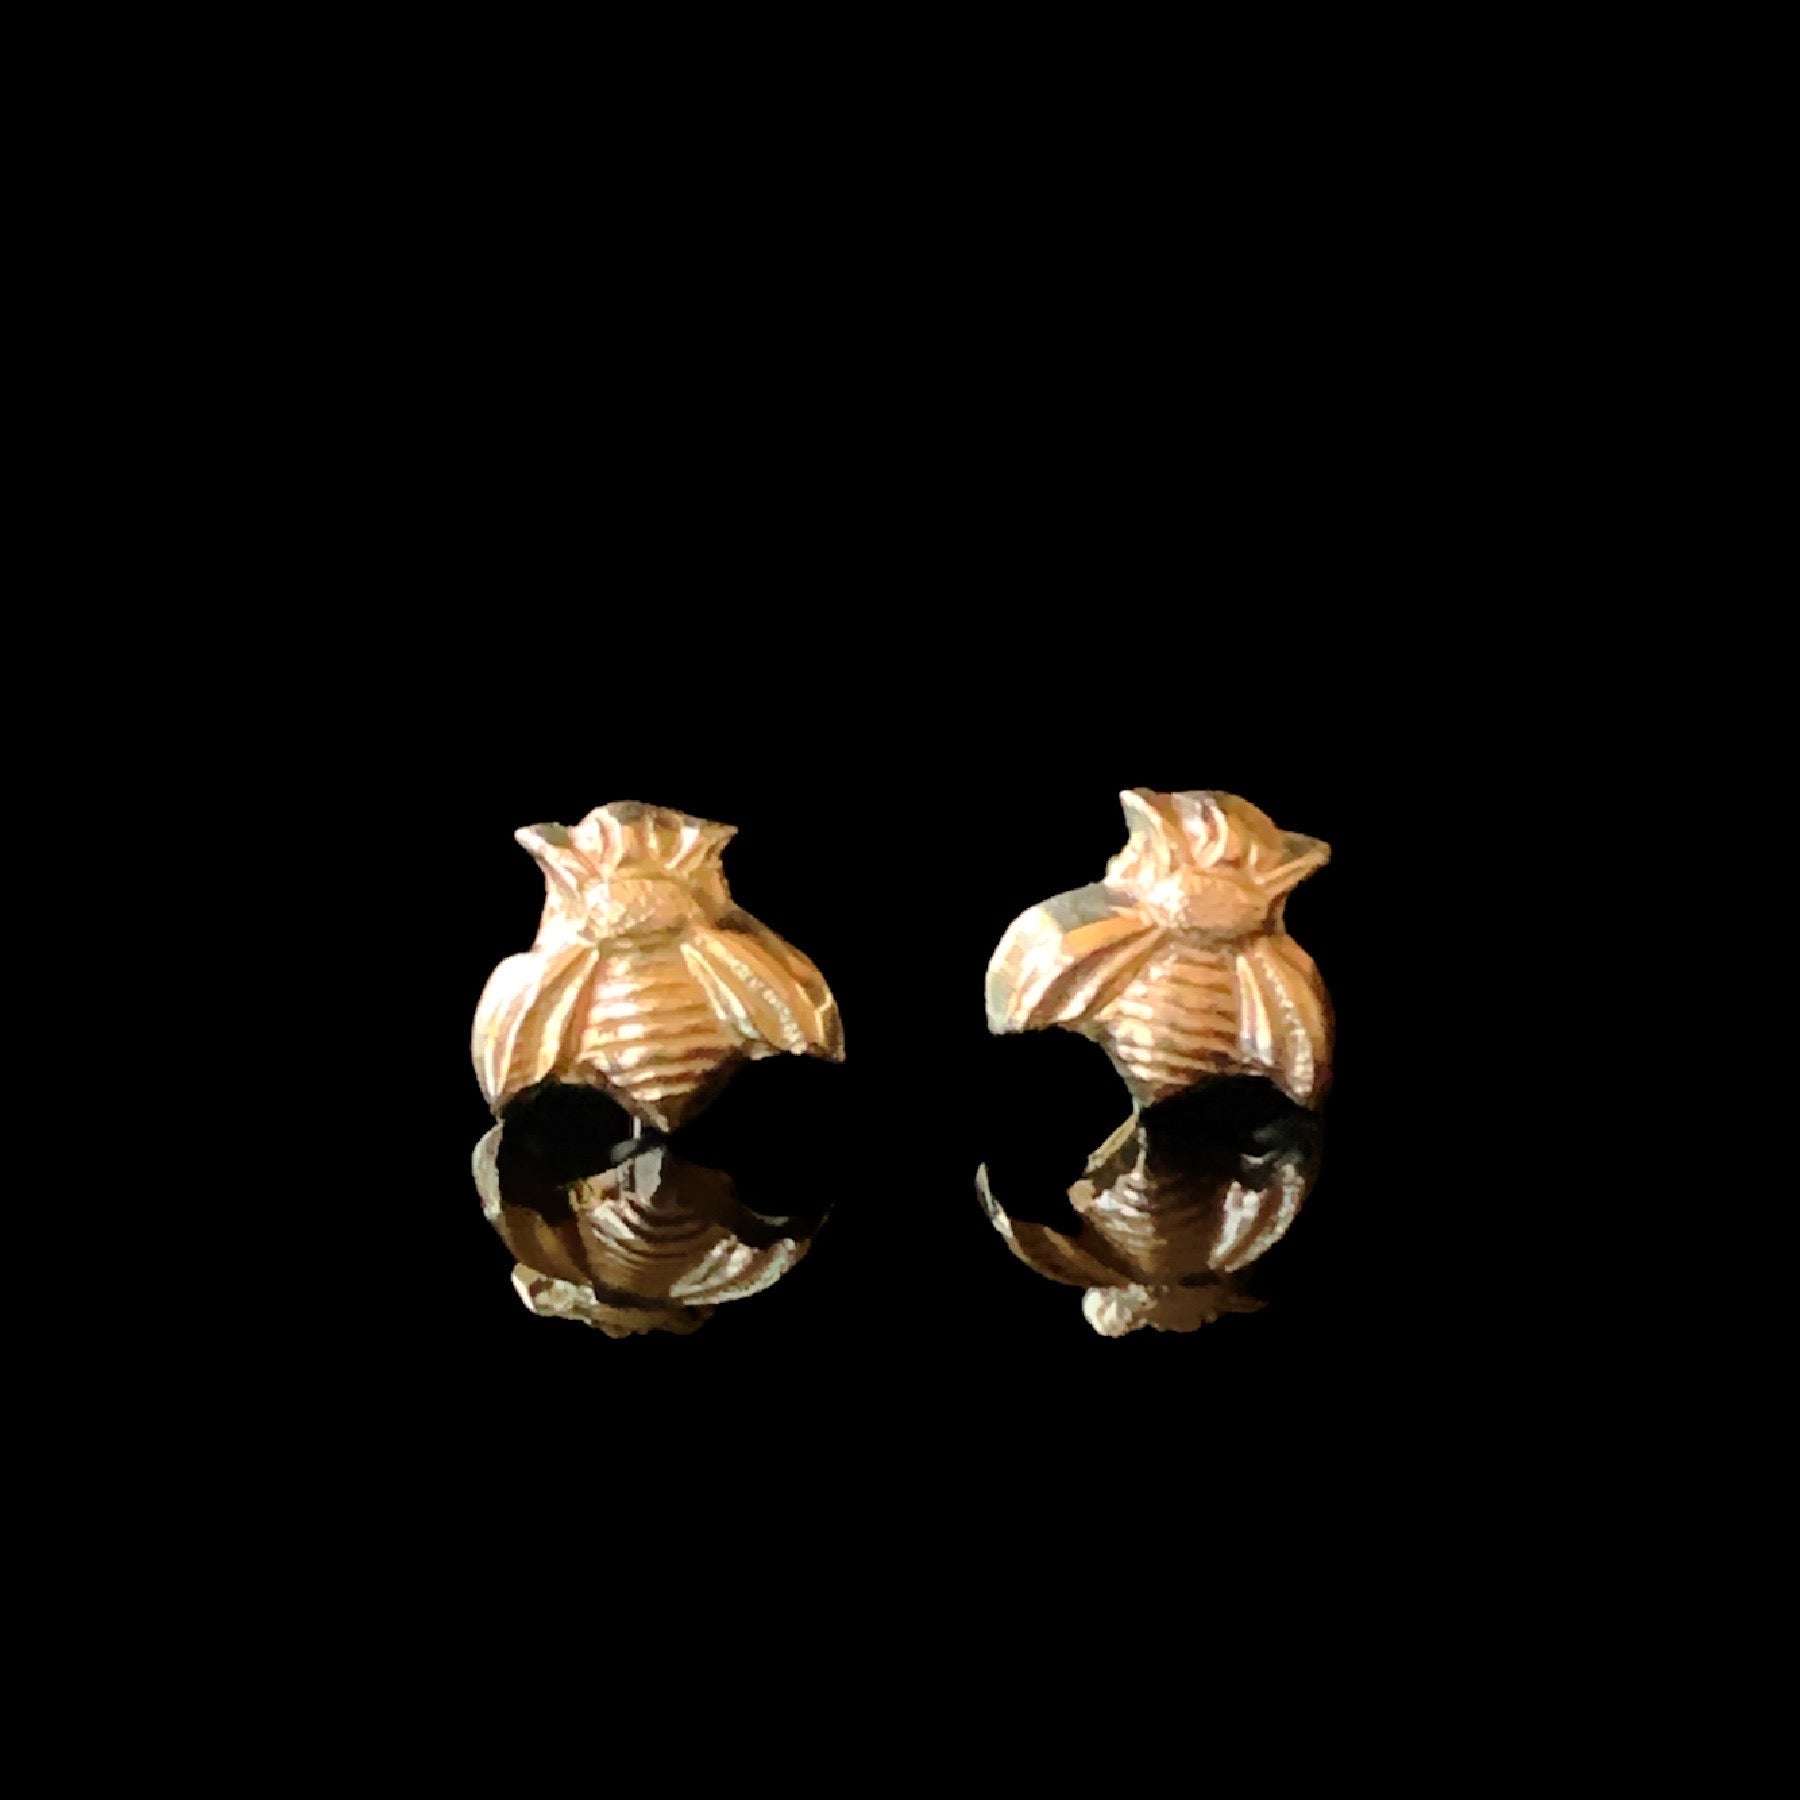 Solid 14K gold honey bee stud earrings.